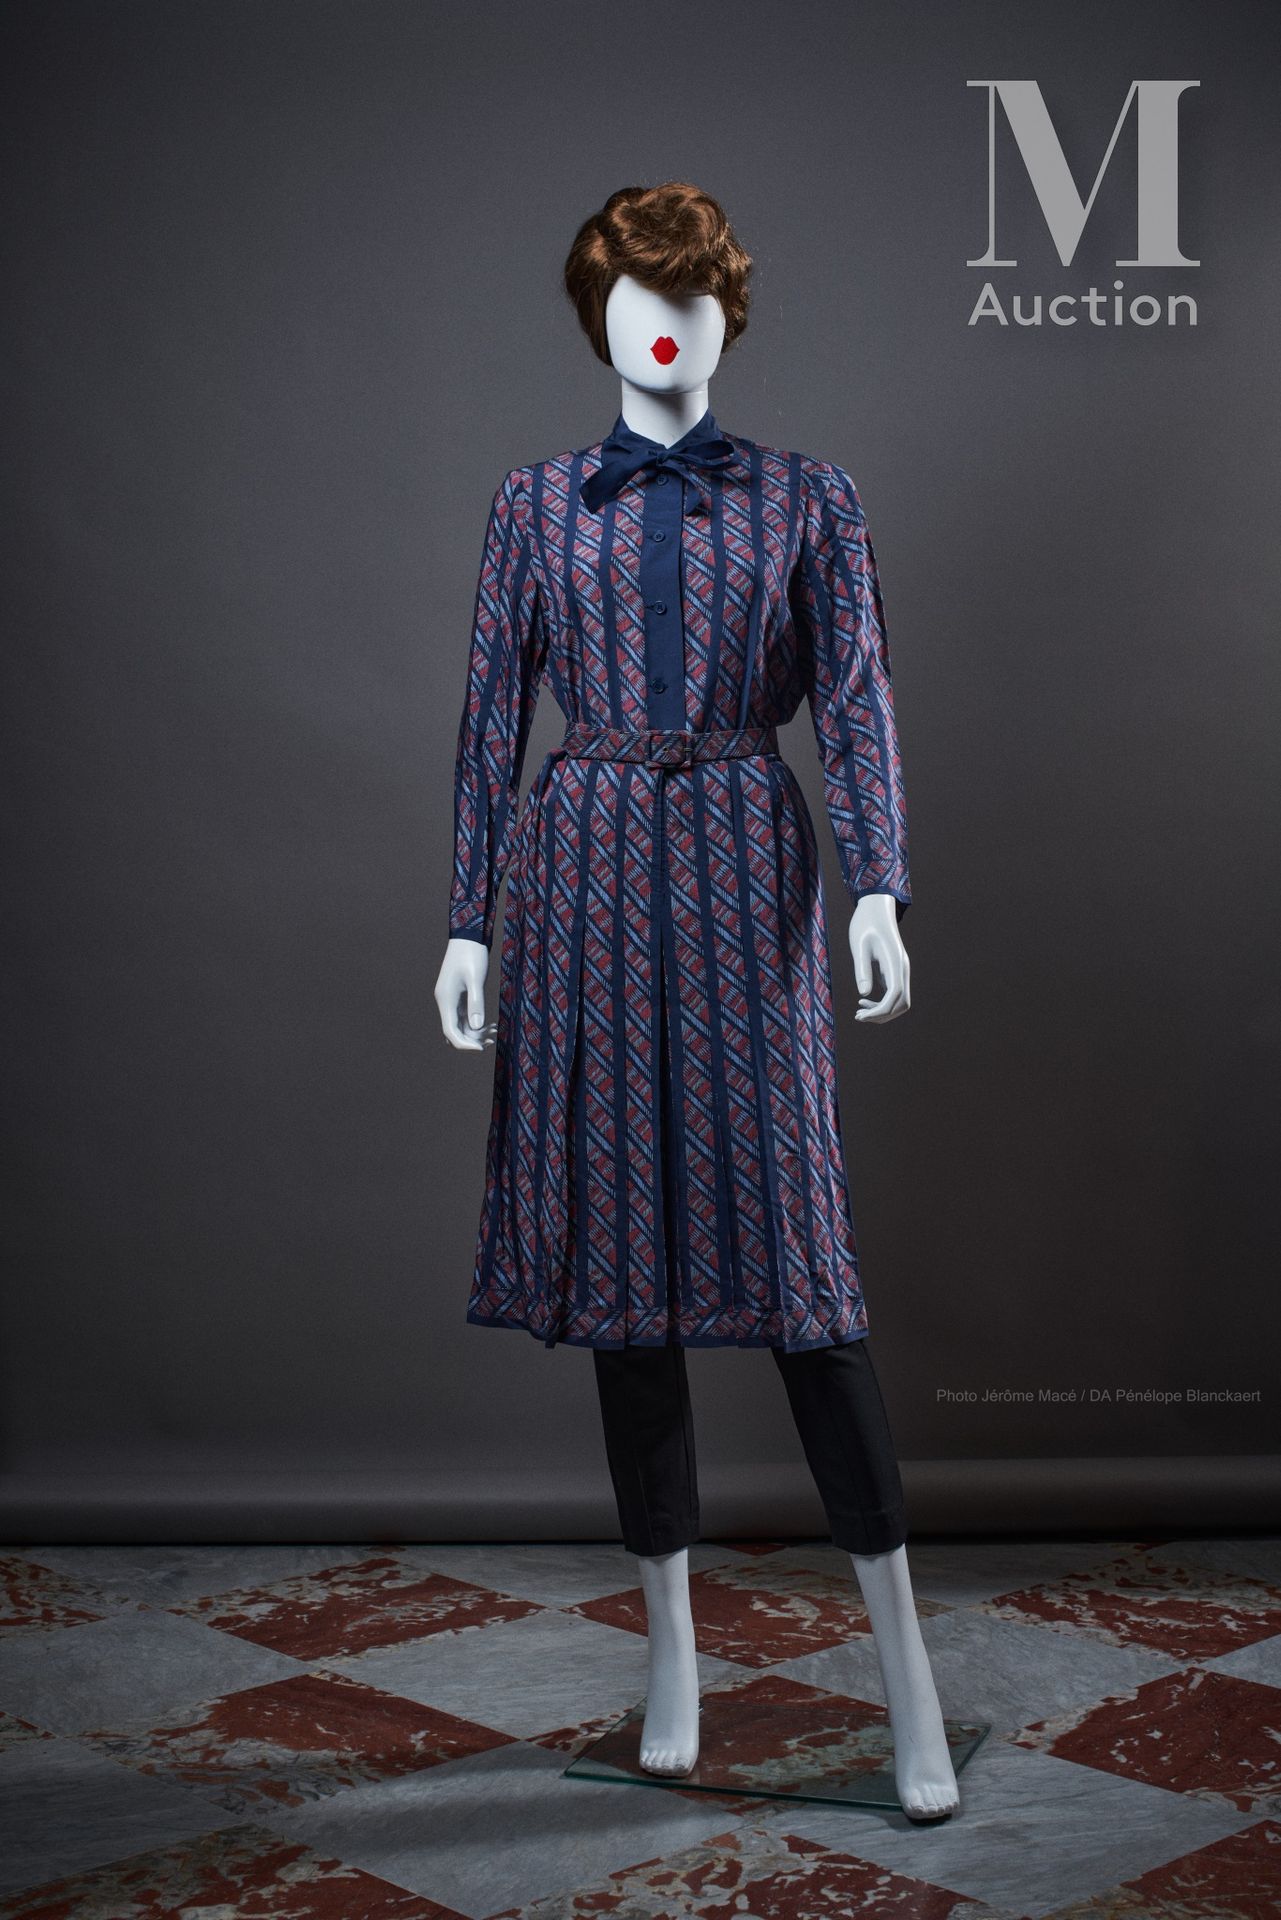 LANVIN - 1970's 礼服

印花绉绸，蓝色和红色的几何装饰，皮带

尺寸：S约。

腰部的迷你恢复

图形学：保留权利